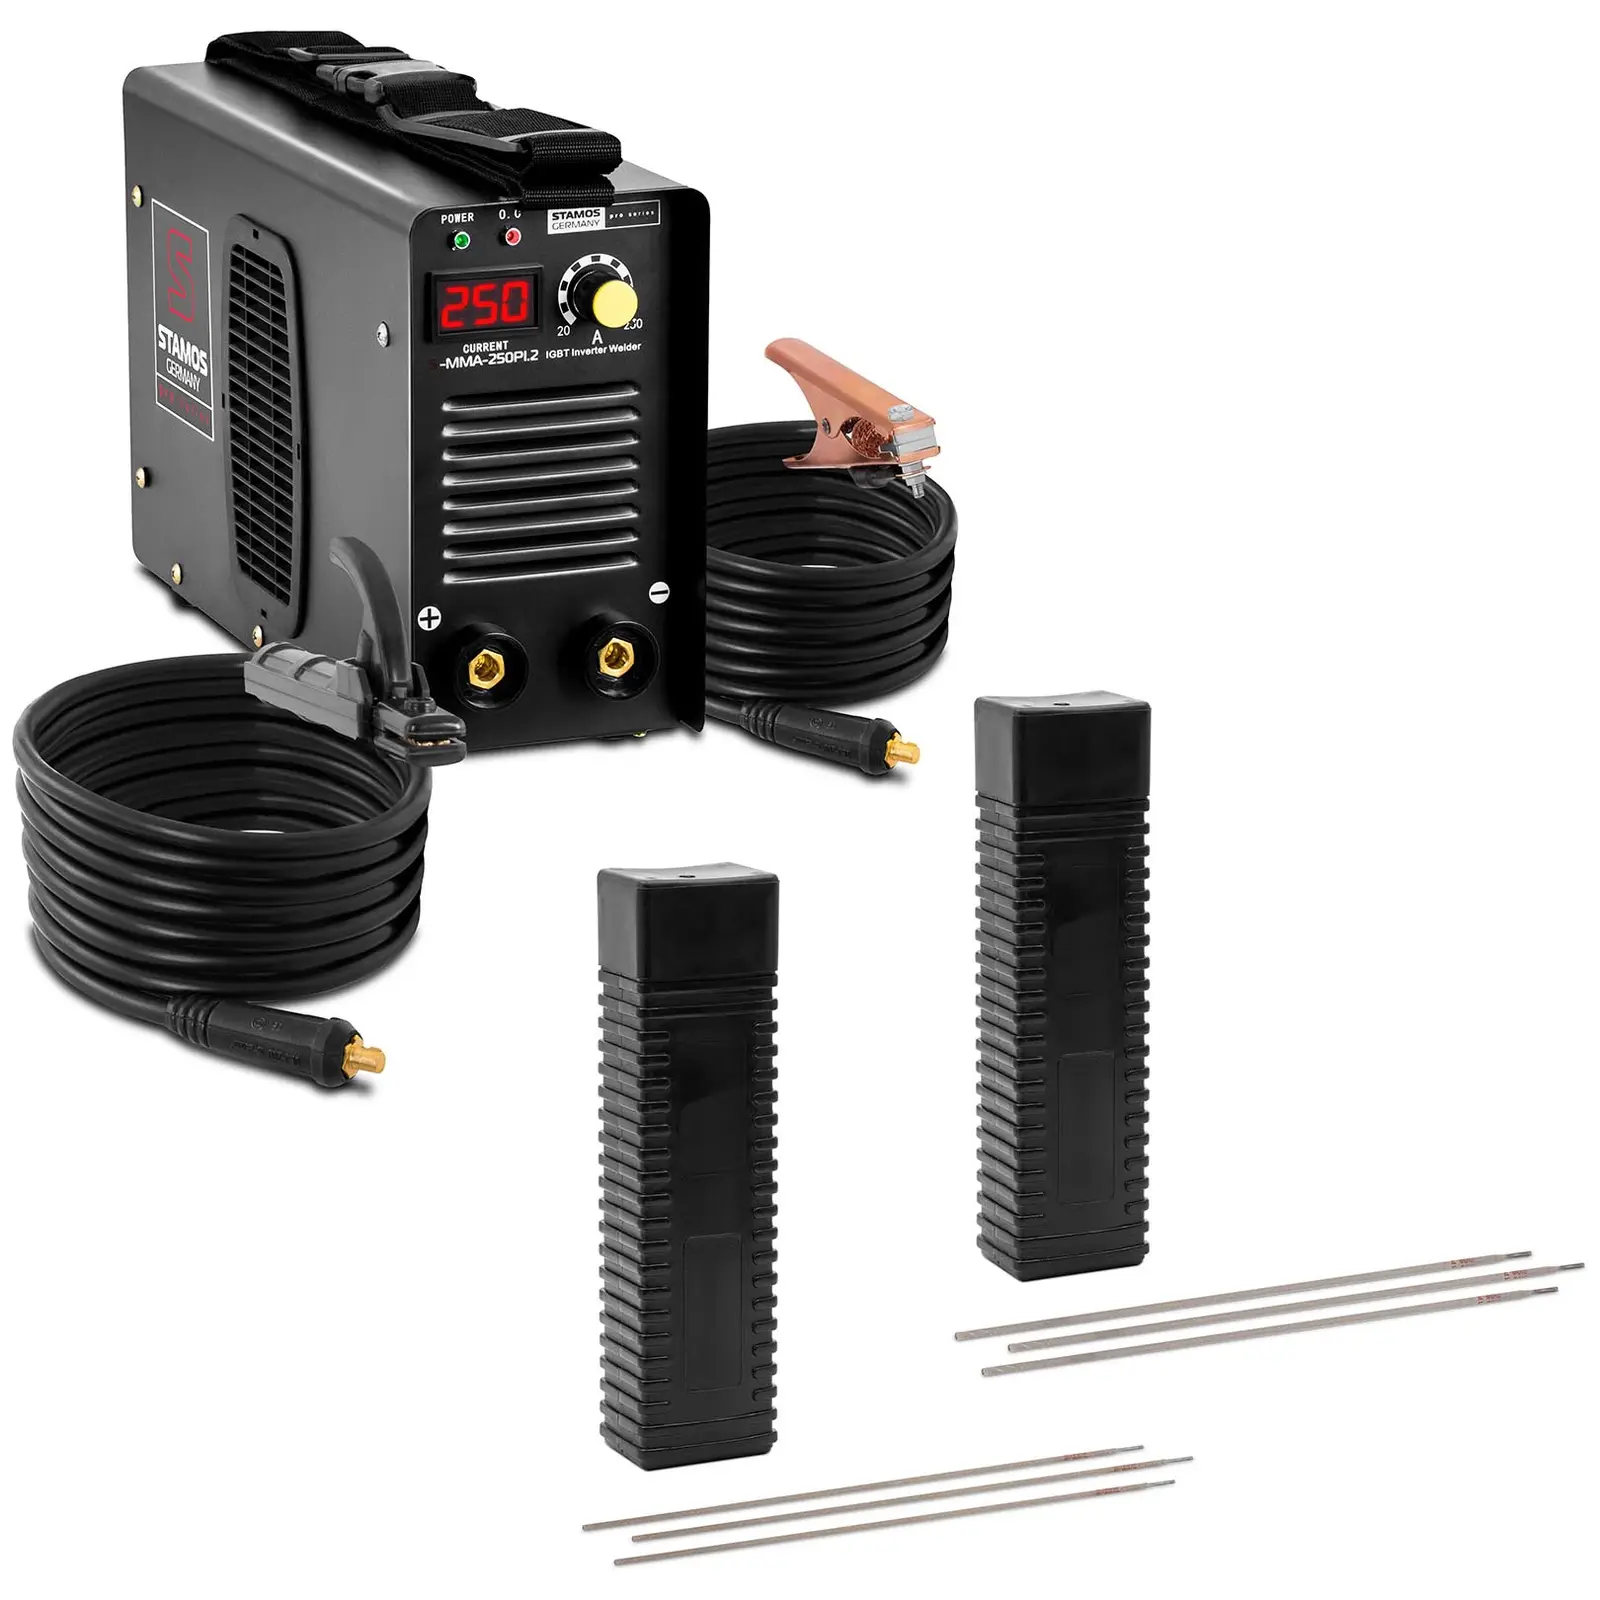 Sveisesett Elektrodesveiser - 250 A - 8 m kabel - 60 % Duty Cycle - Elektroder E6013 - Ø 2,5 x 350 mm - 5 kg & E6013 - Ø 3,2 x 350 mm - 5 kg